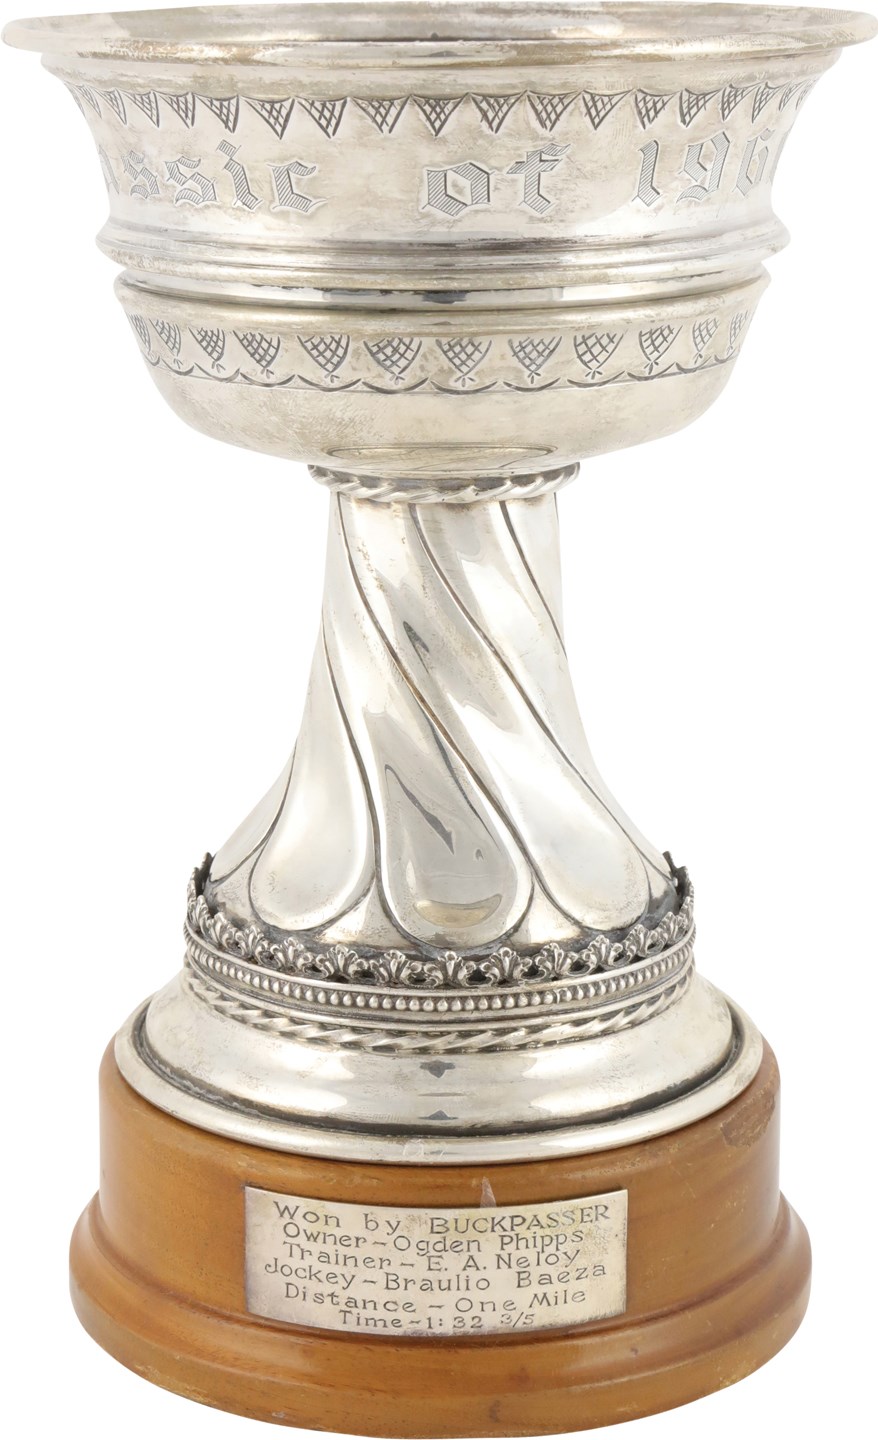 Horse Racing - "Buckpasser" 1966 Arlington Classic "World Record" Silver Trophy